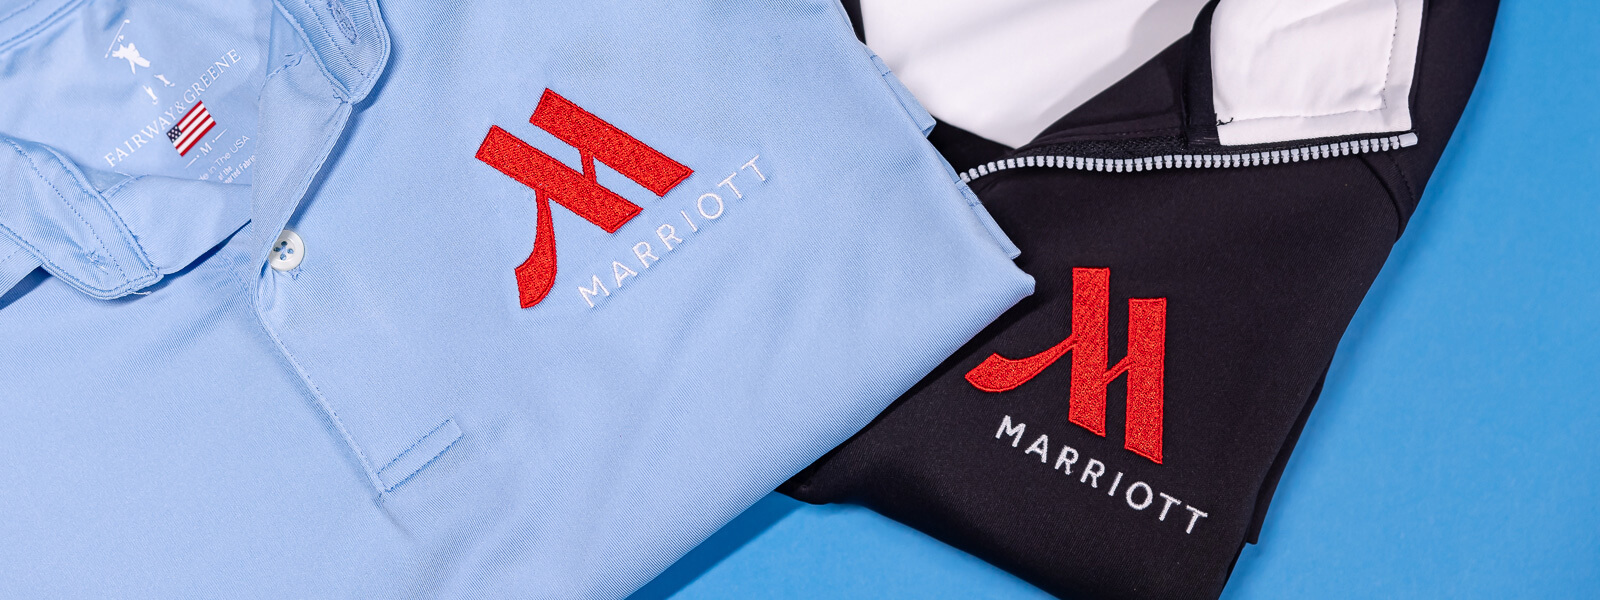 Personalized Polos Shirts. Custom Golf Shirt. Golf Shirts Custom. Customize Polos Shirts.